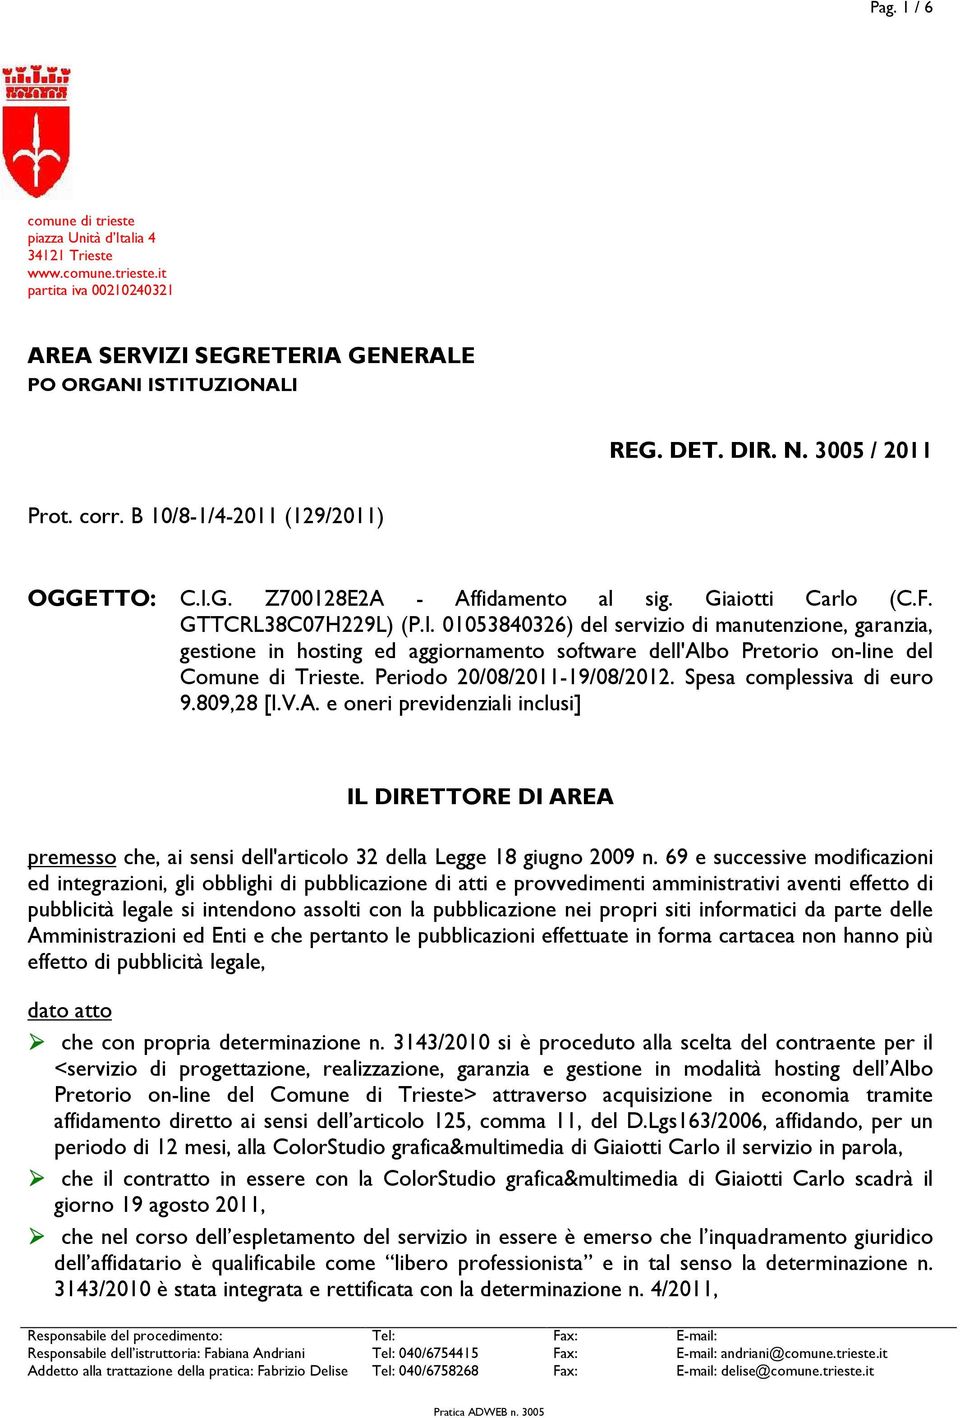 G. Z700128E2A - Affidamento al sig. Giaiotti Carlo (C.F. GTTCRL38C07H229L) (P.I.